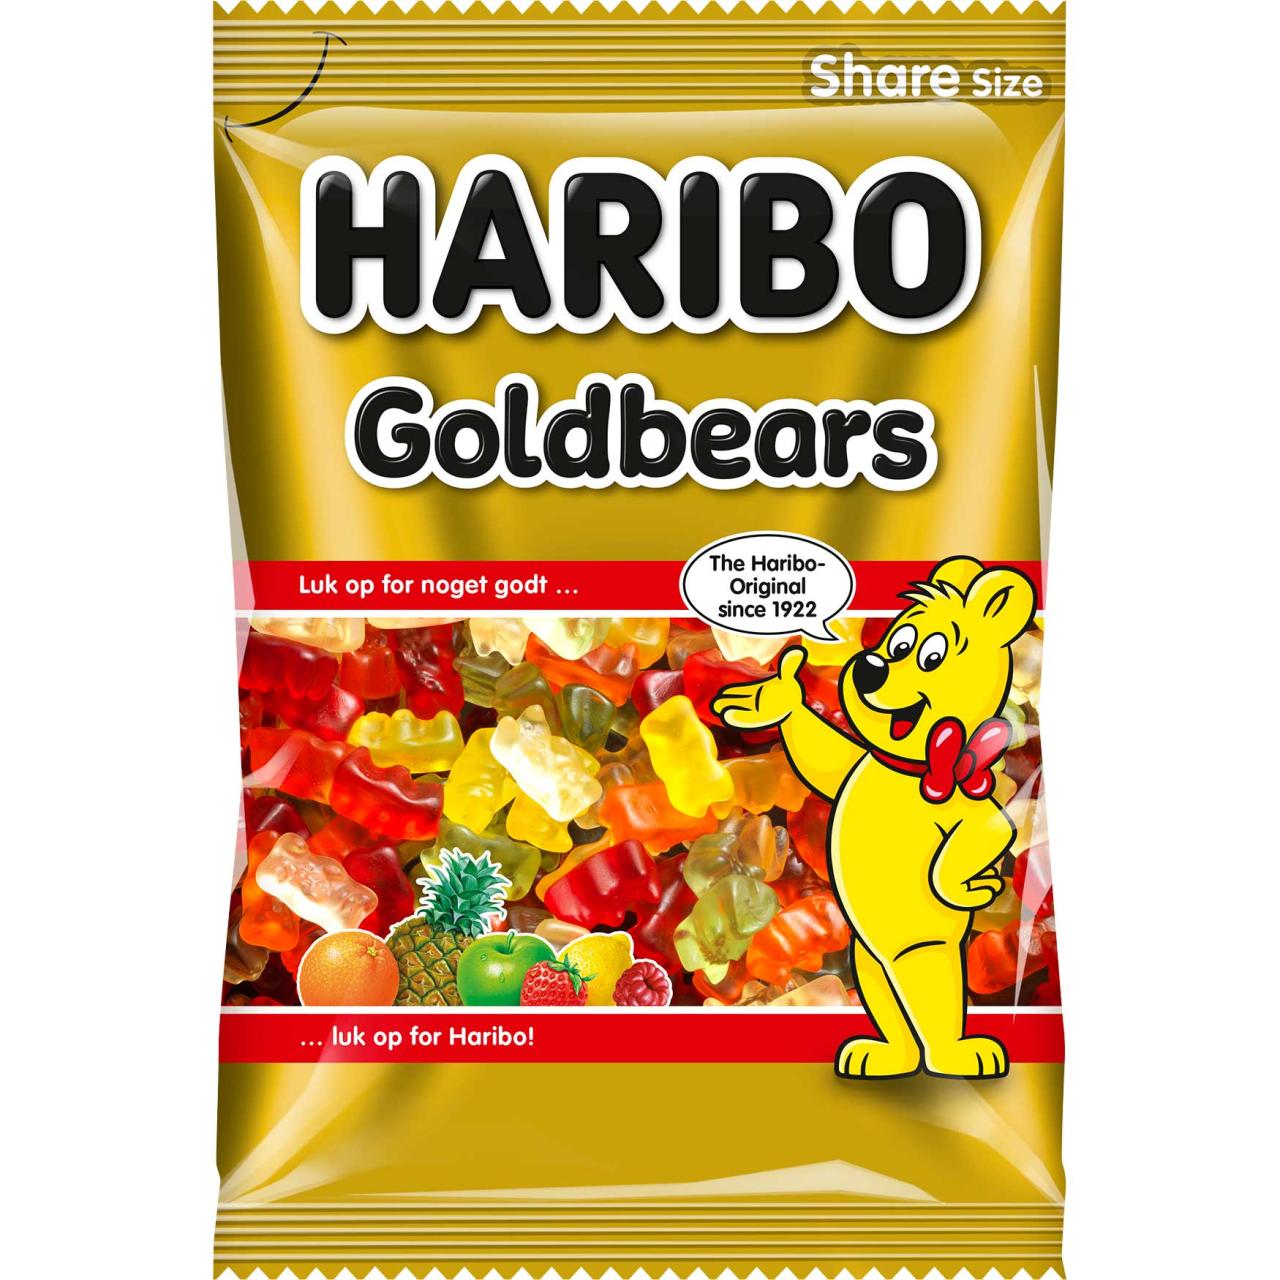 Haribo Goldbears 375g